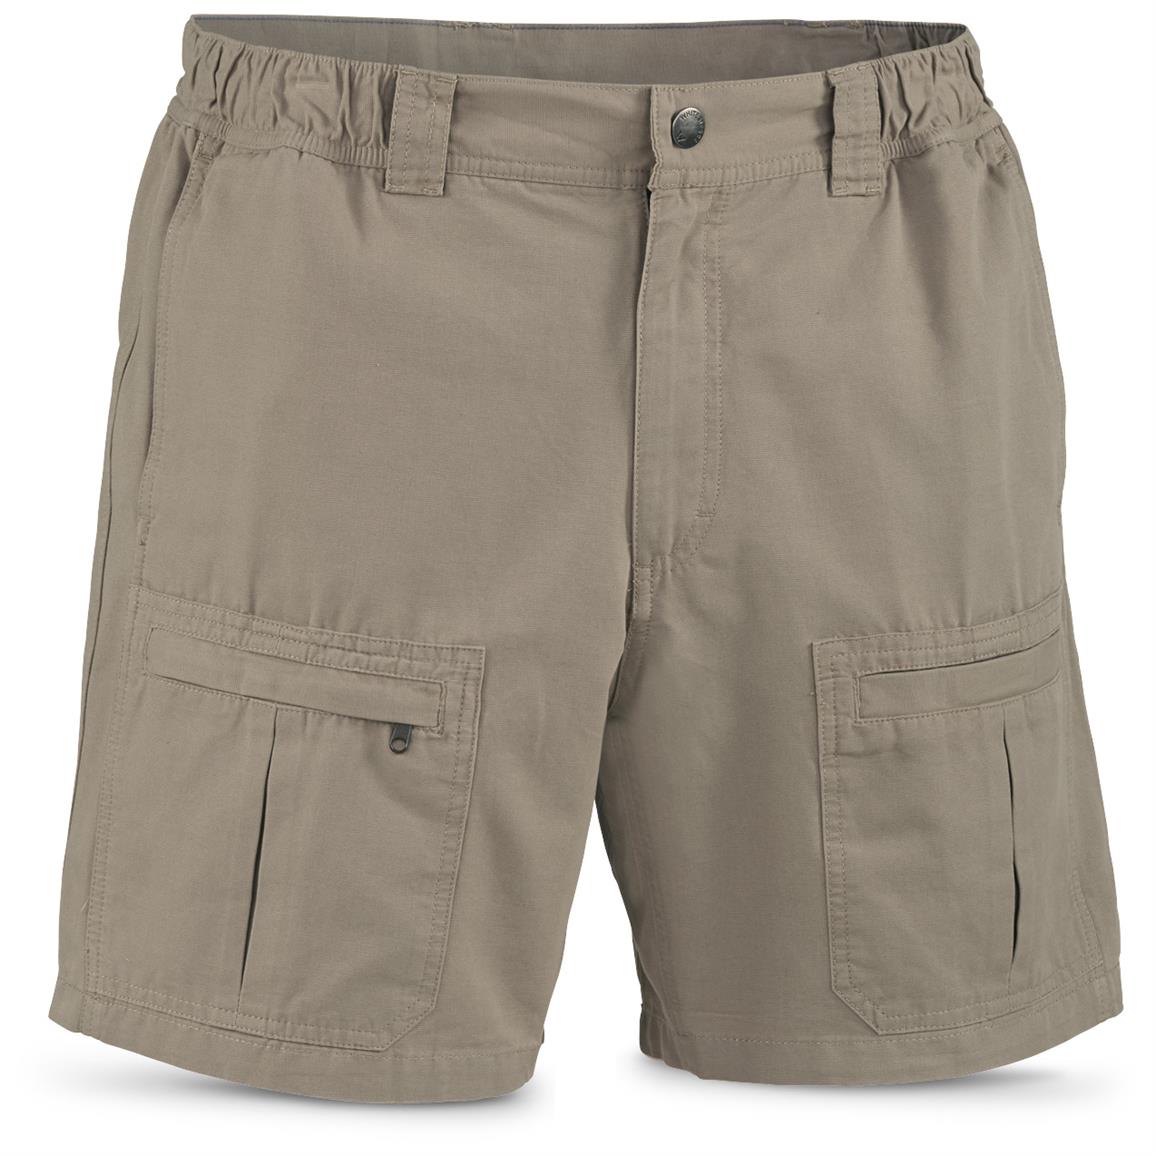 White Sierra Men's Granby Shorts - 657819, Shorts at Sportsman's Guide